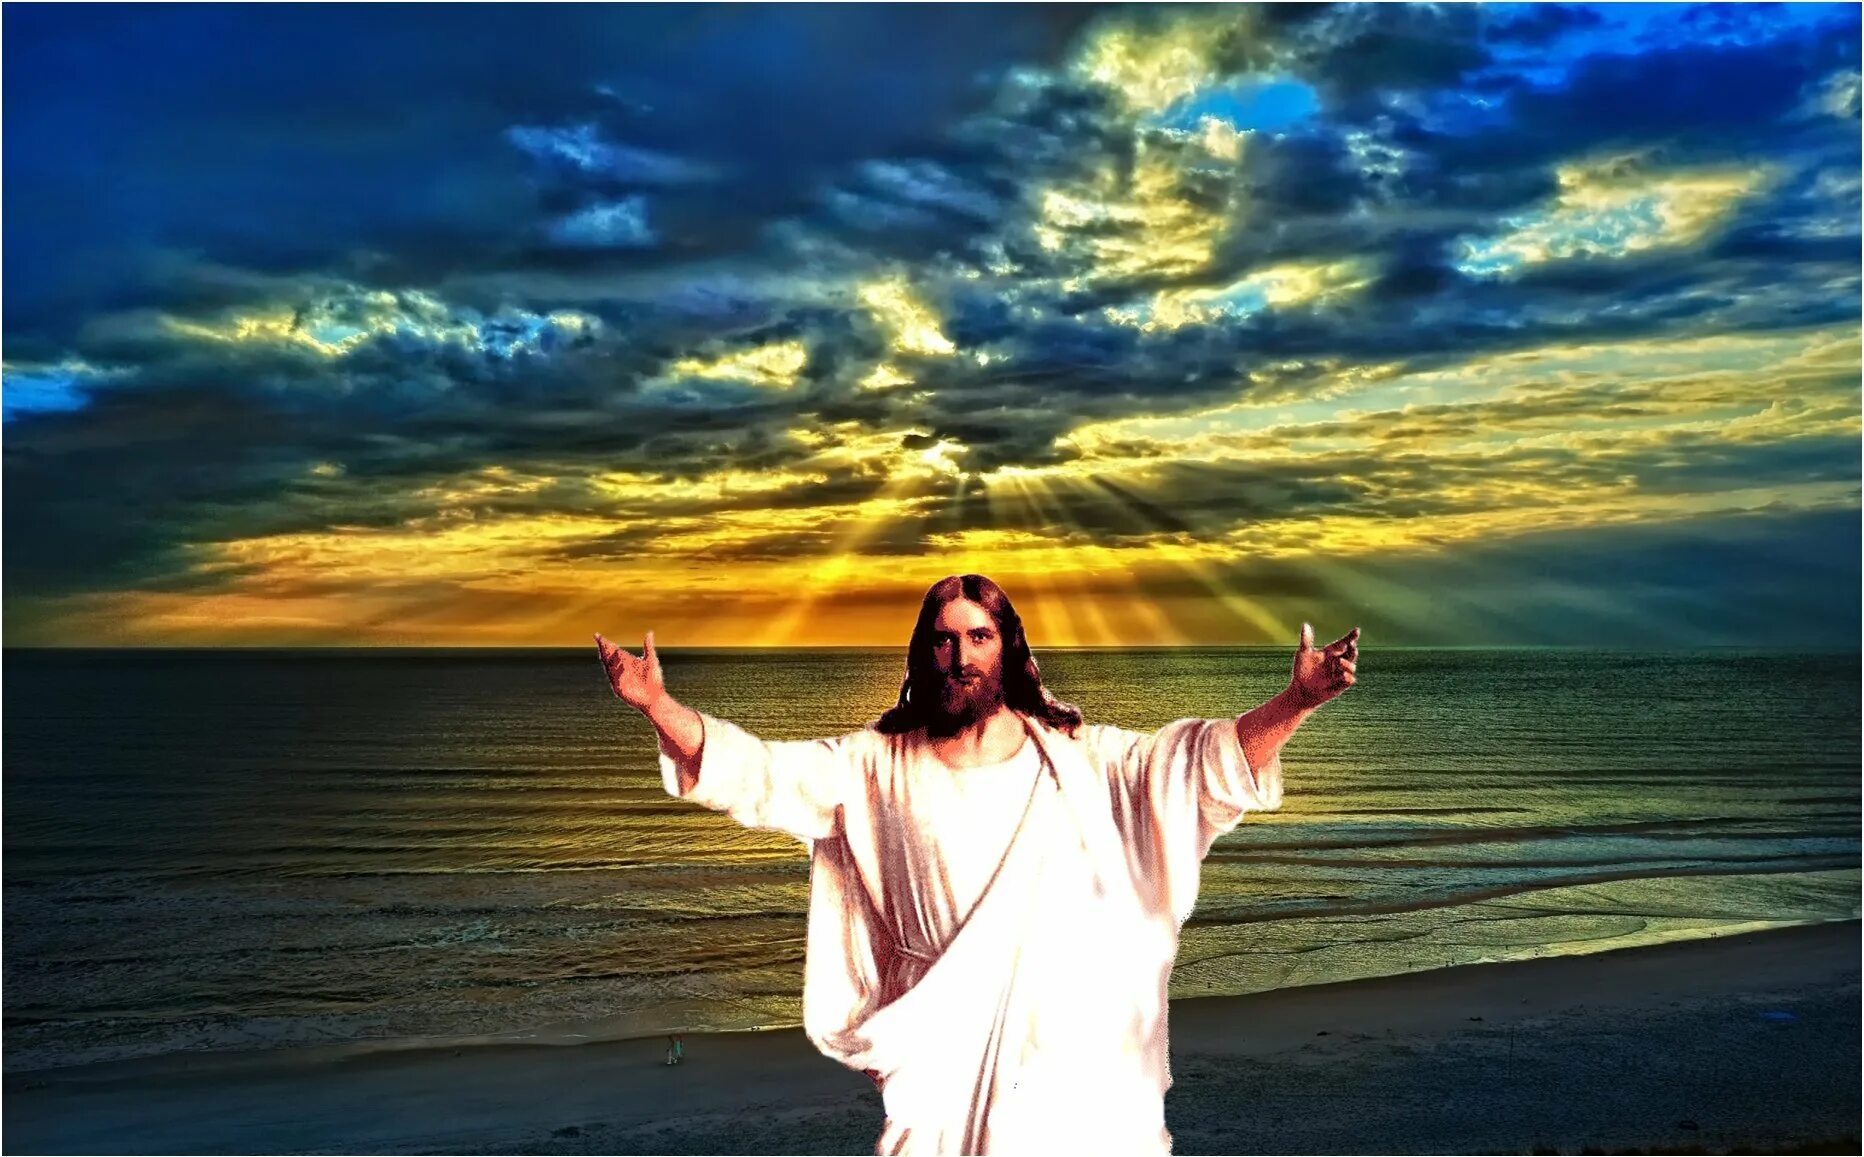 Картинки бога. " Иисус. Бог и человек". ( Jesus).. Джезус Крайст. Джизес Крайст. Исус Исус Господь Господь.